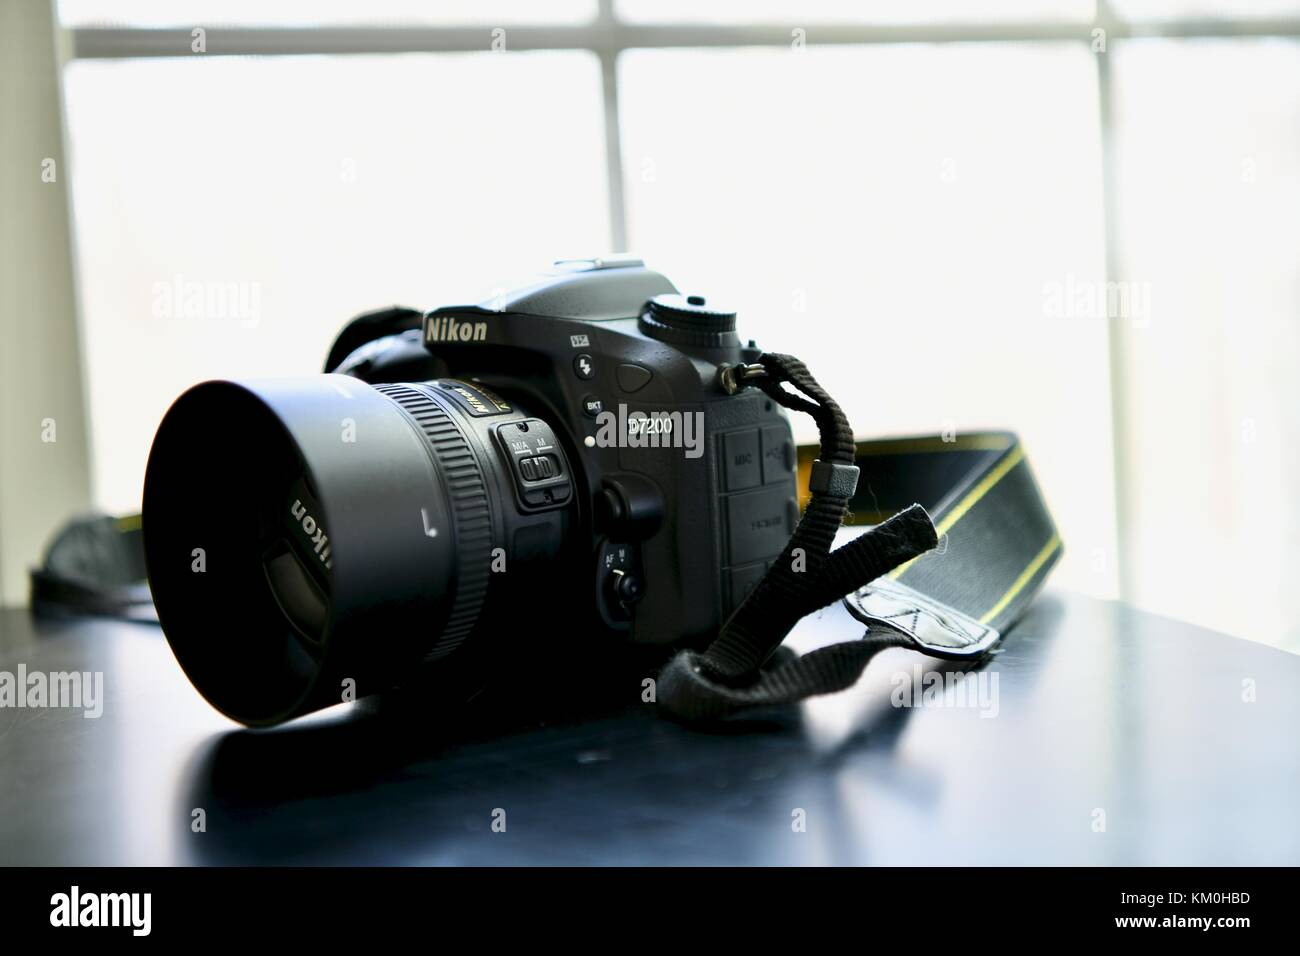 Nikon D7200 dslr camera with 50mm Nikkor lens Stock Photo